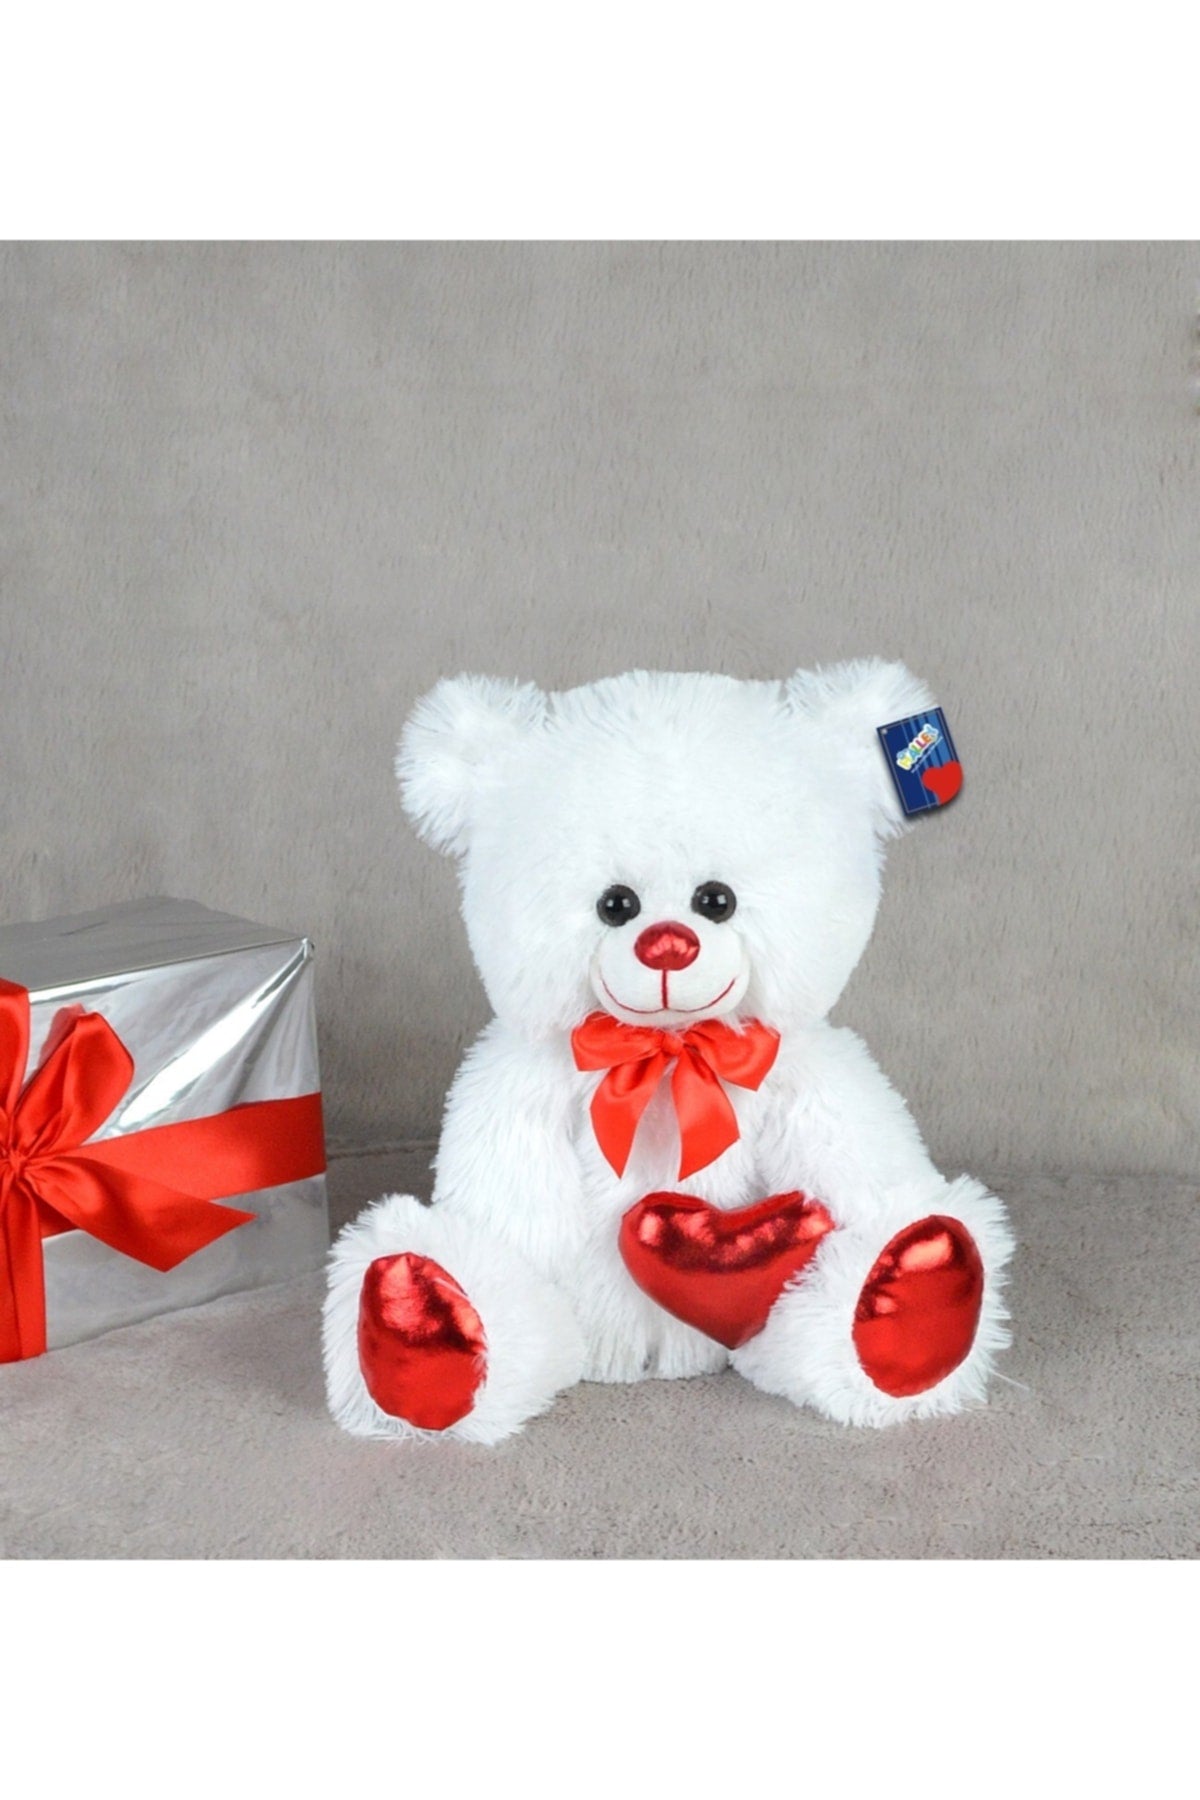 Toy 40 Cm Shiny Fabric Heart Holding White Teddy Bear 78801